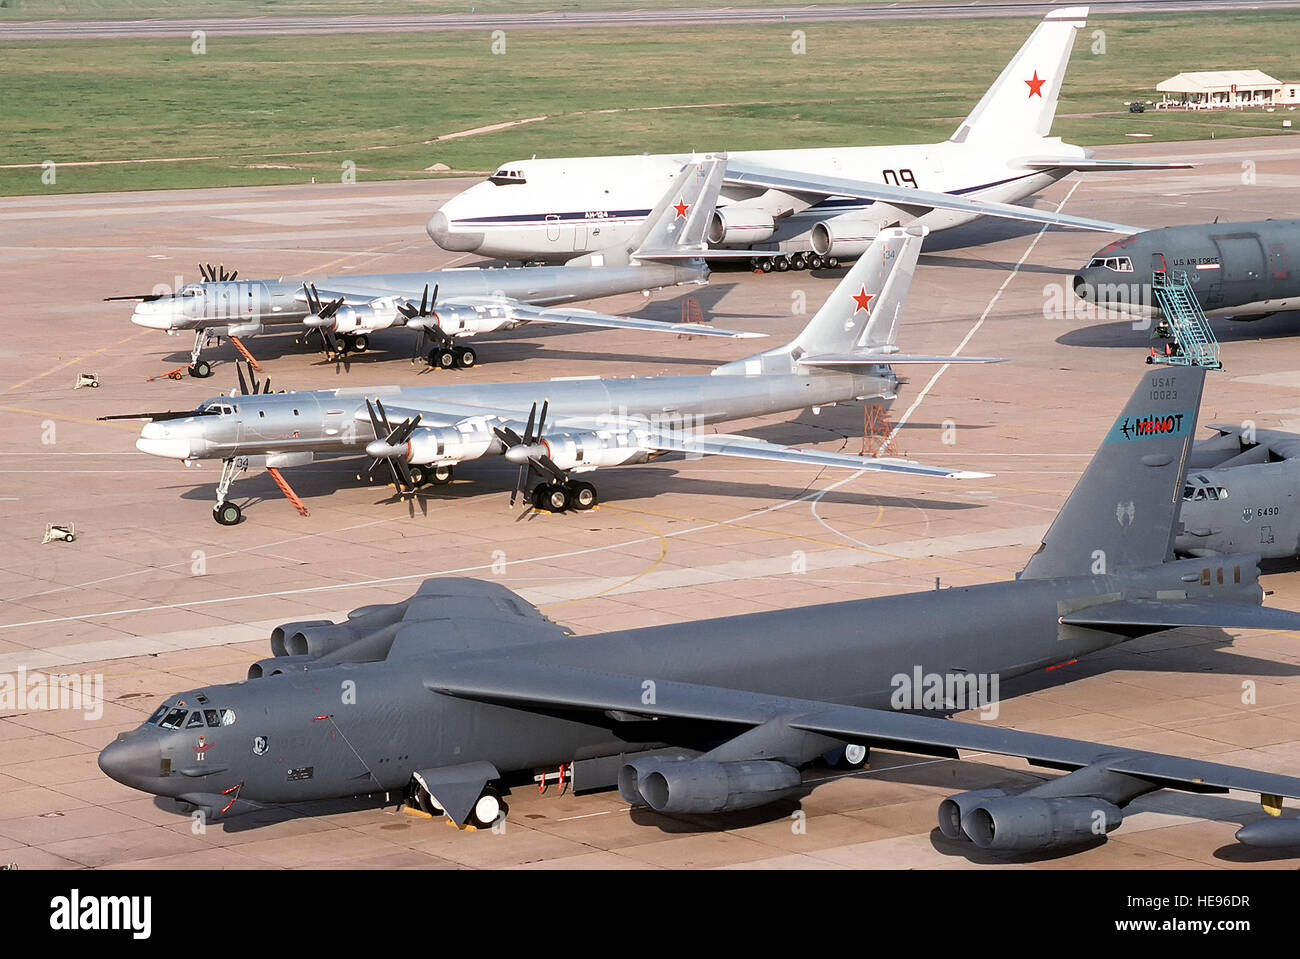 https://c8.alamy.com/comp/HE96DR/two-tu-95-bear-bomber-aircraft-center-and-an-an-124-condor-transport-HE96DR.jpg